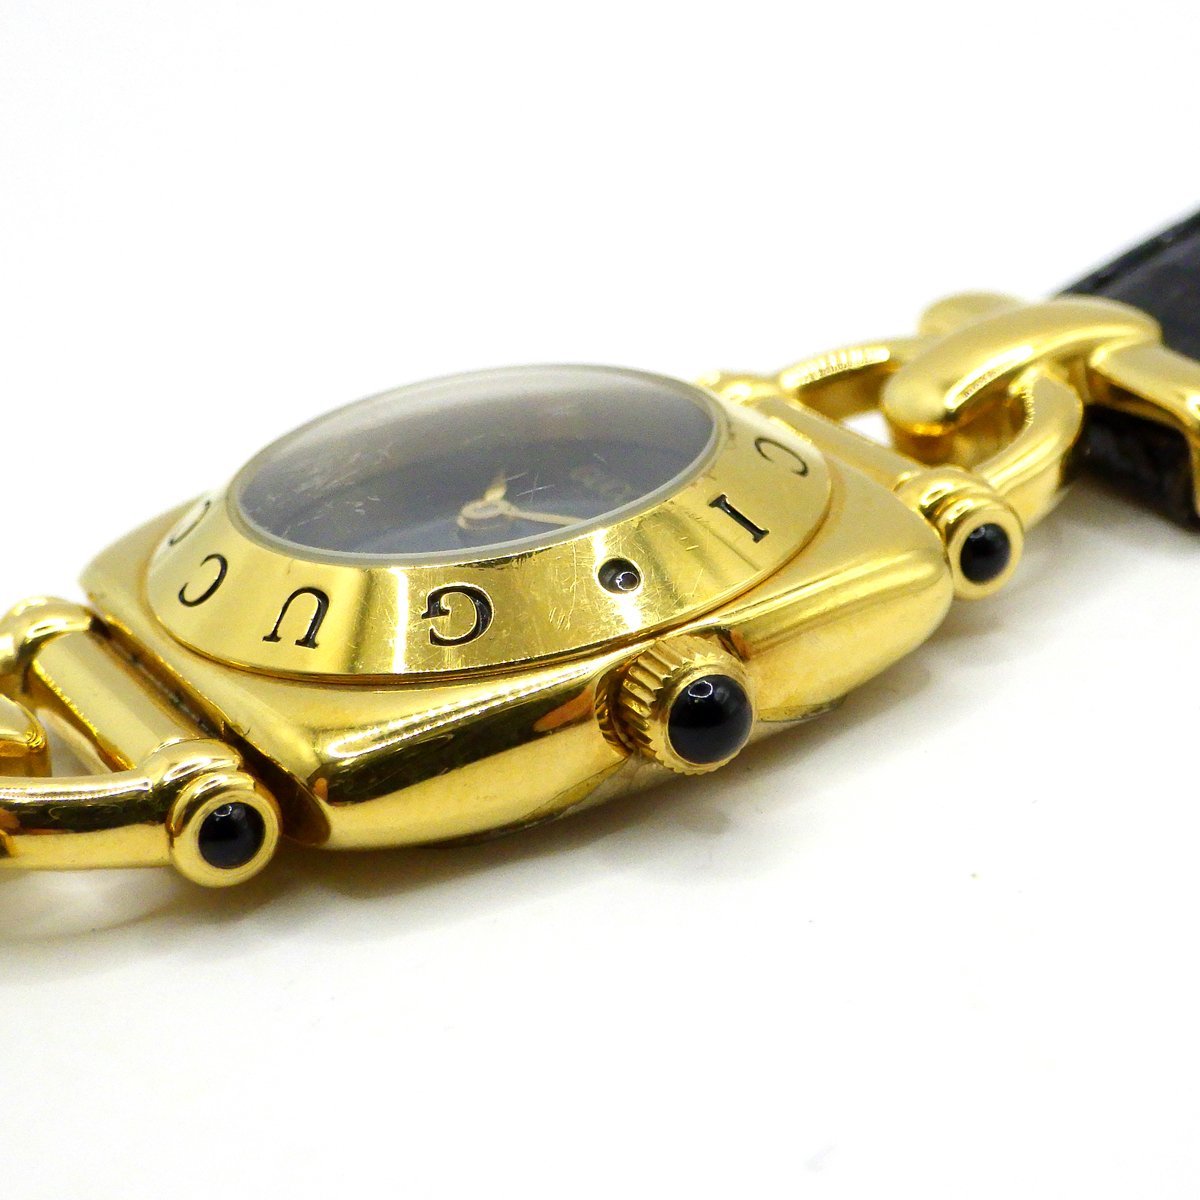  Gucci 6300 L кварц Gold кожа ремень наручные часы с футляром *